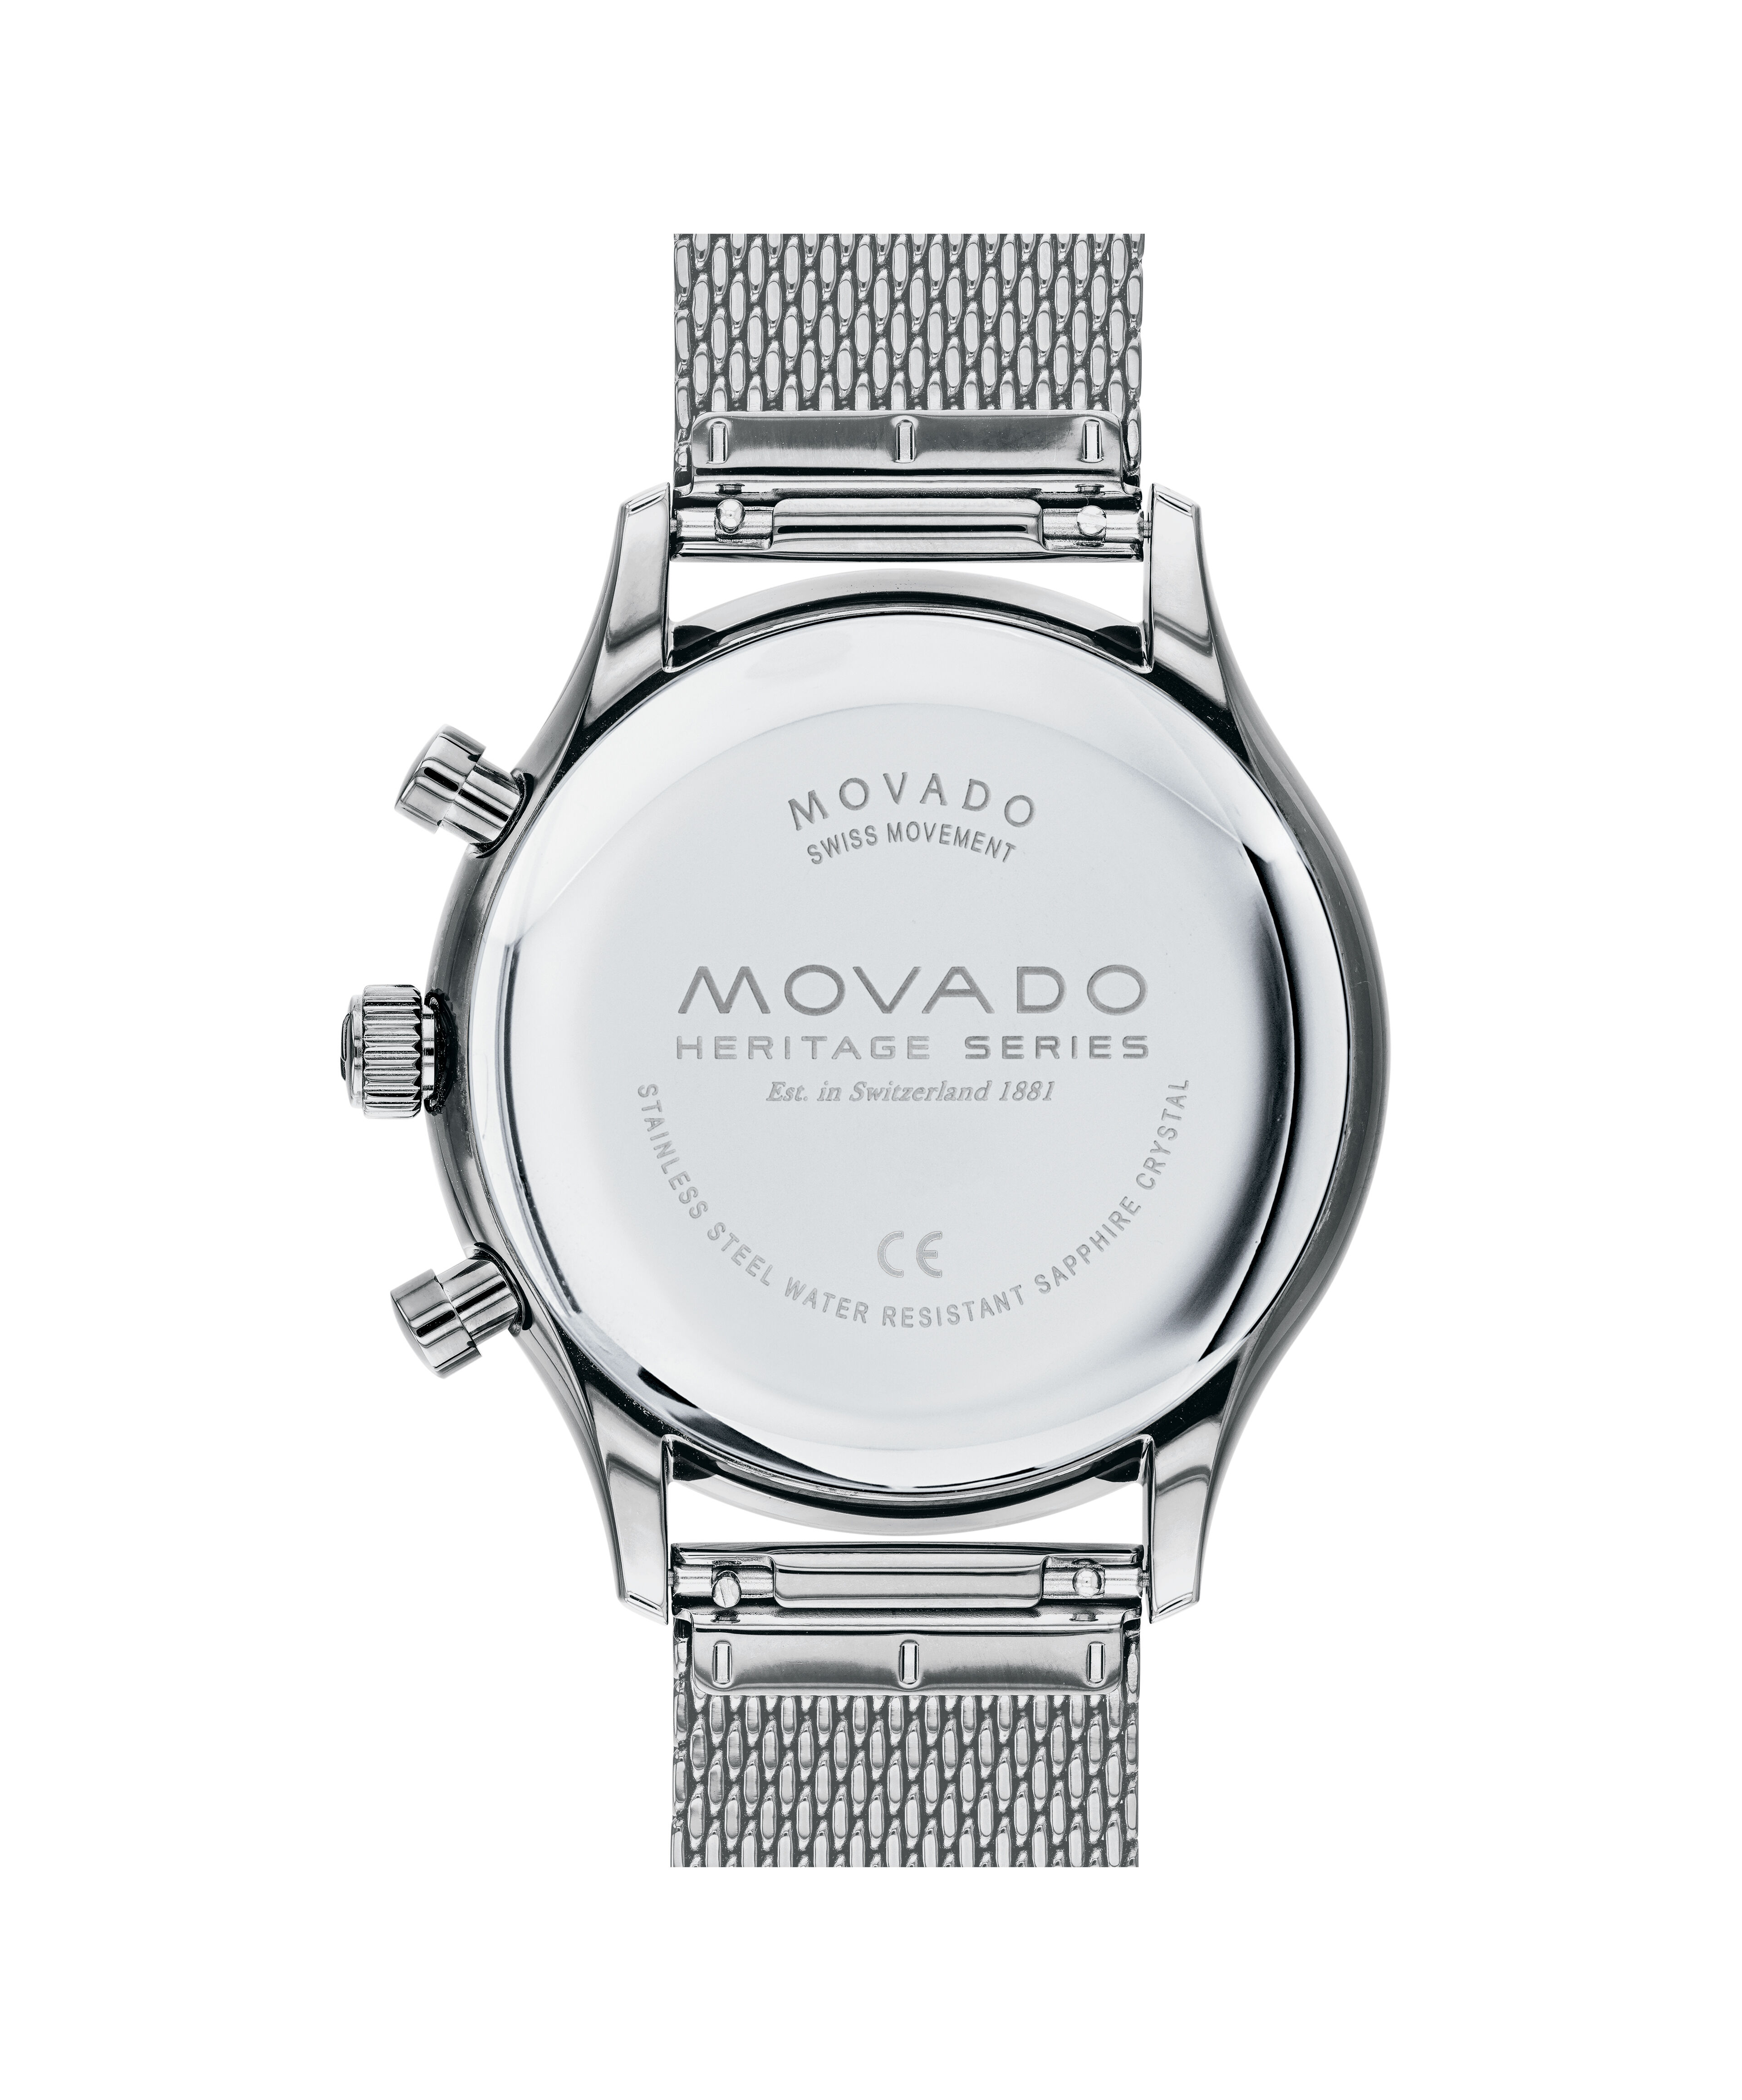 Movado 8 days alarm pocket watch